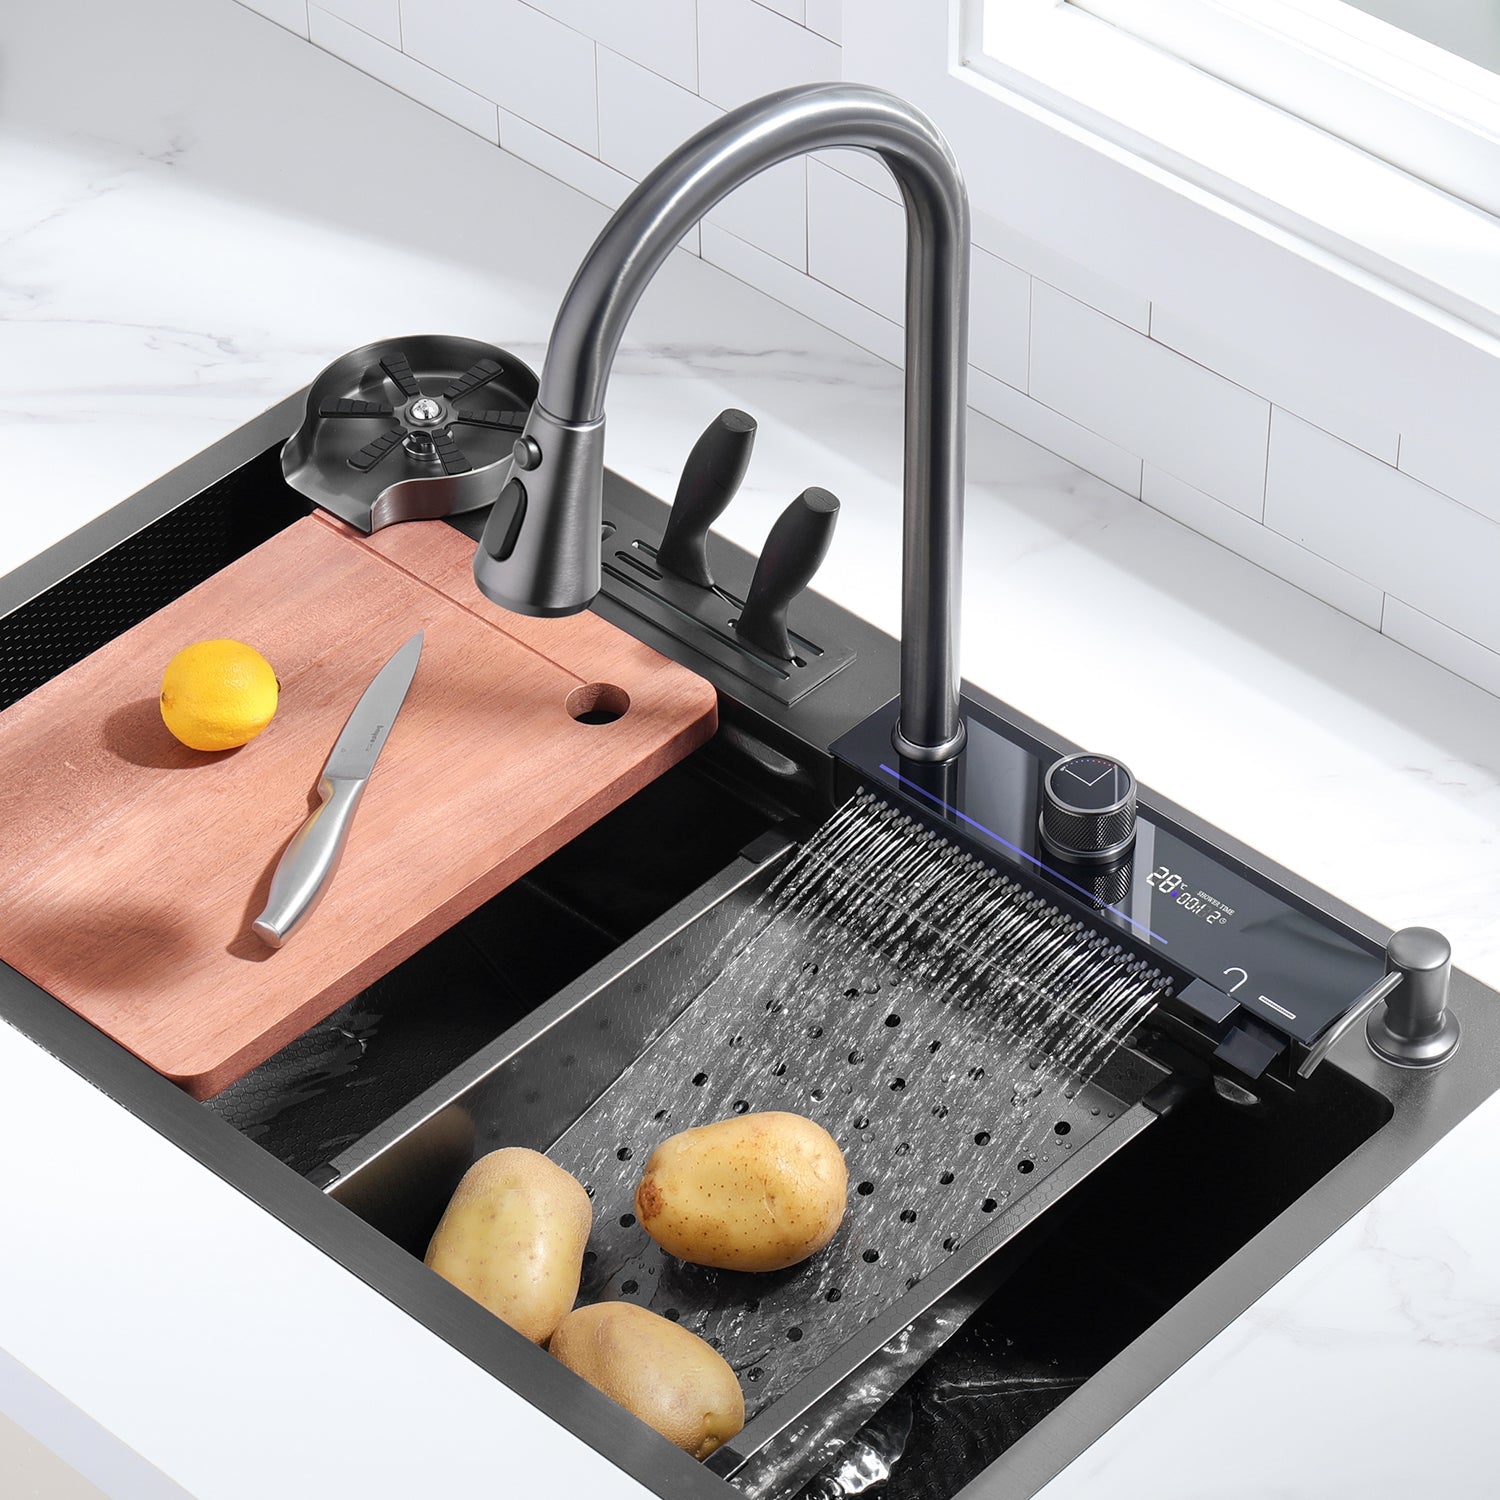 Lefton Waterfall Workstation Kitchen Sink Set Digital Temperature Display & LED Lighting-KS2205 -Kitchen Sinks- Lefton Home